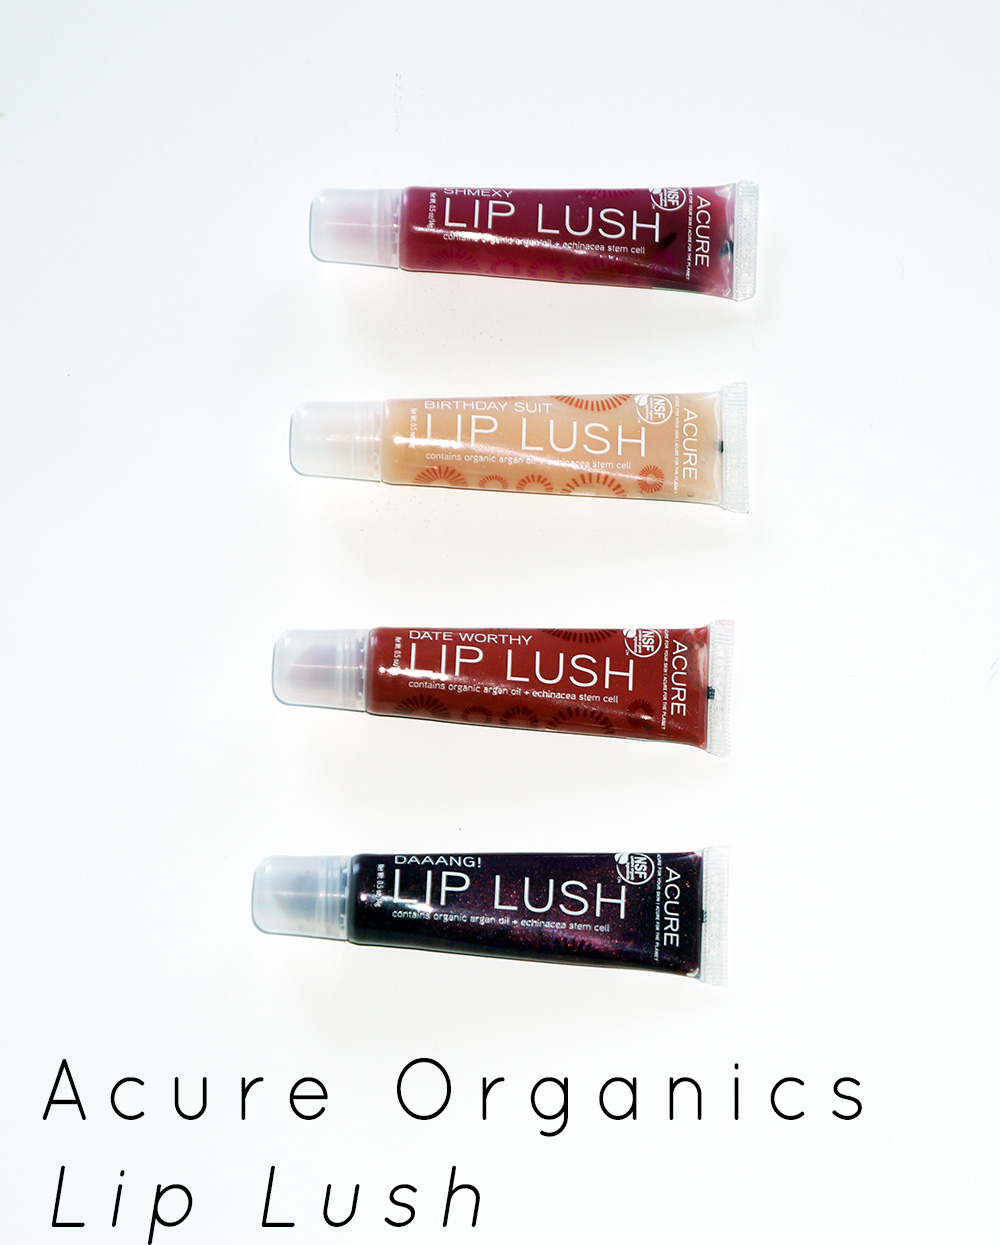 acure-organics-lip-lush-packaging